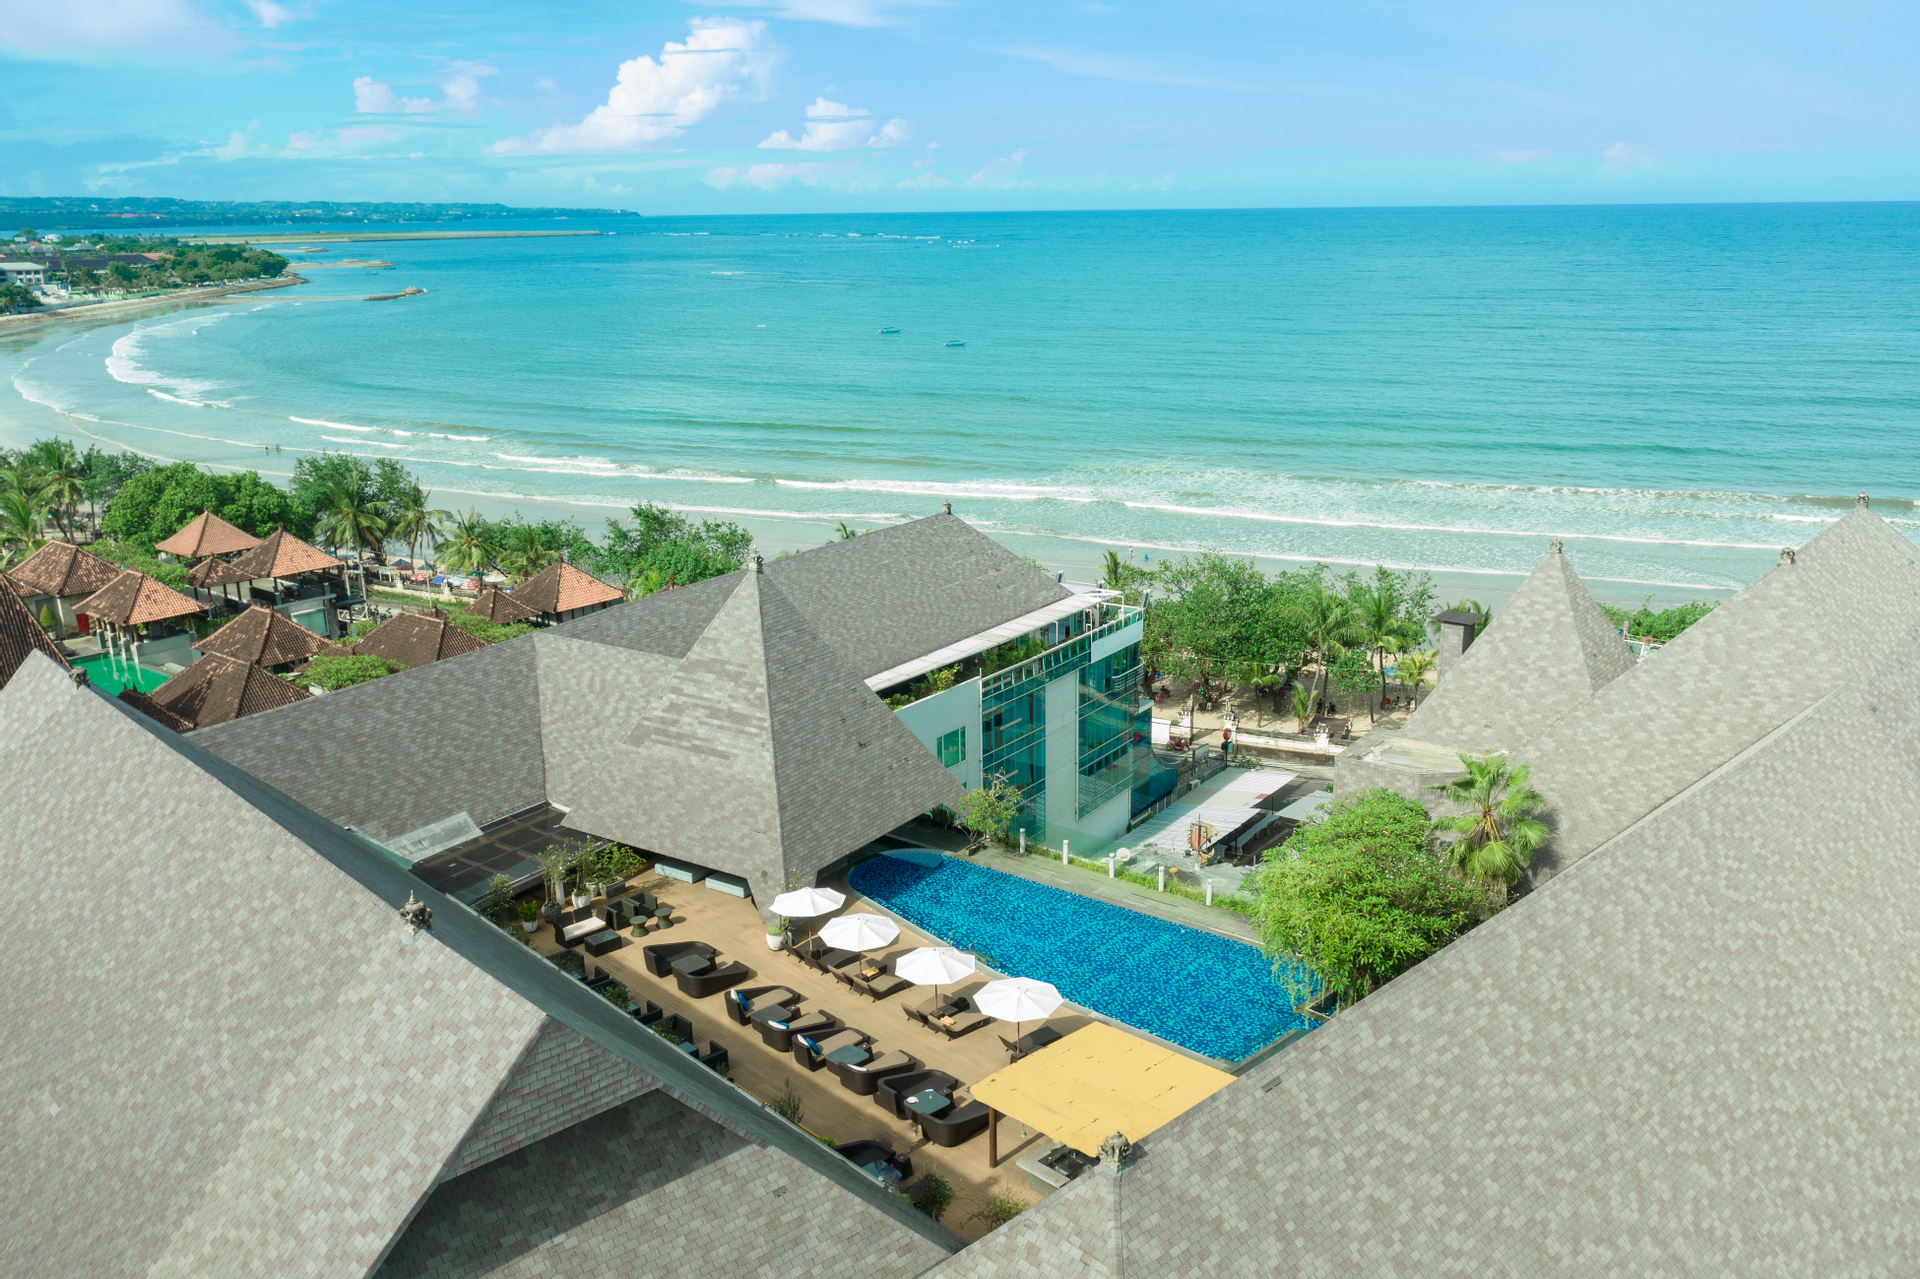 The Kuta Beach Heritage Hotel - Managed by Accor, Badung